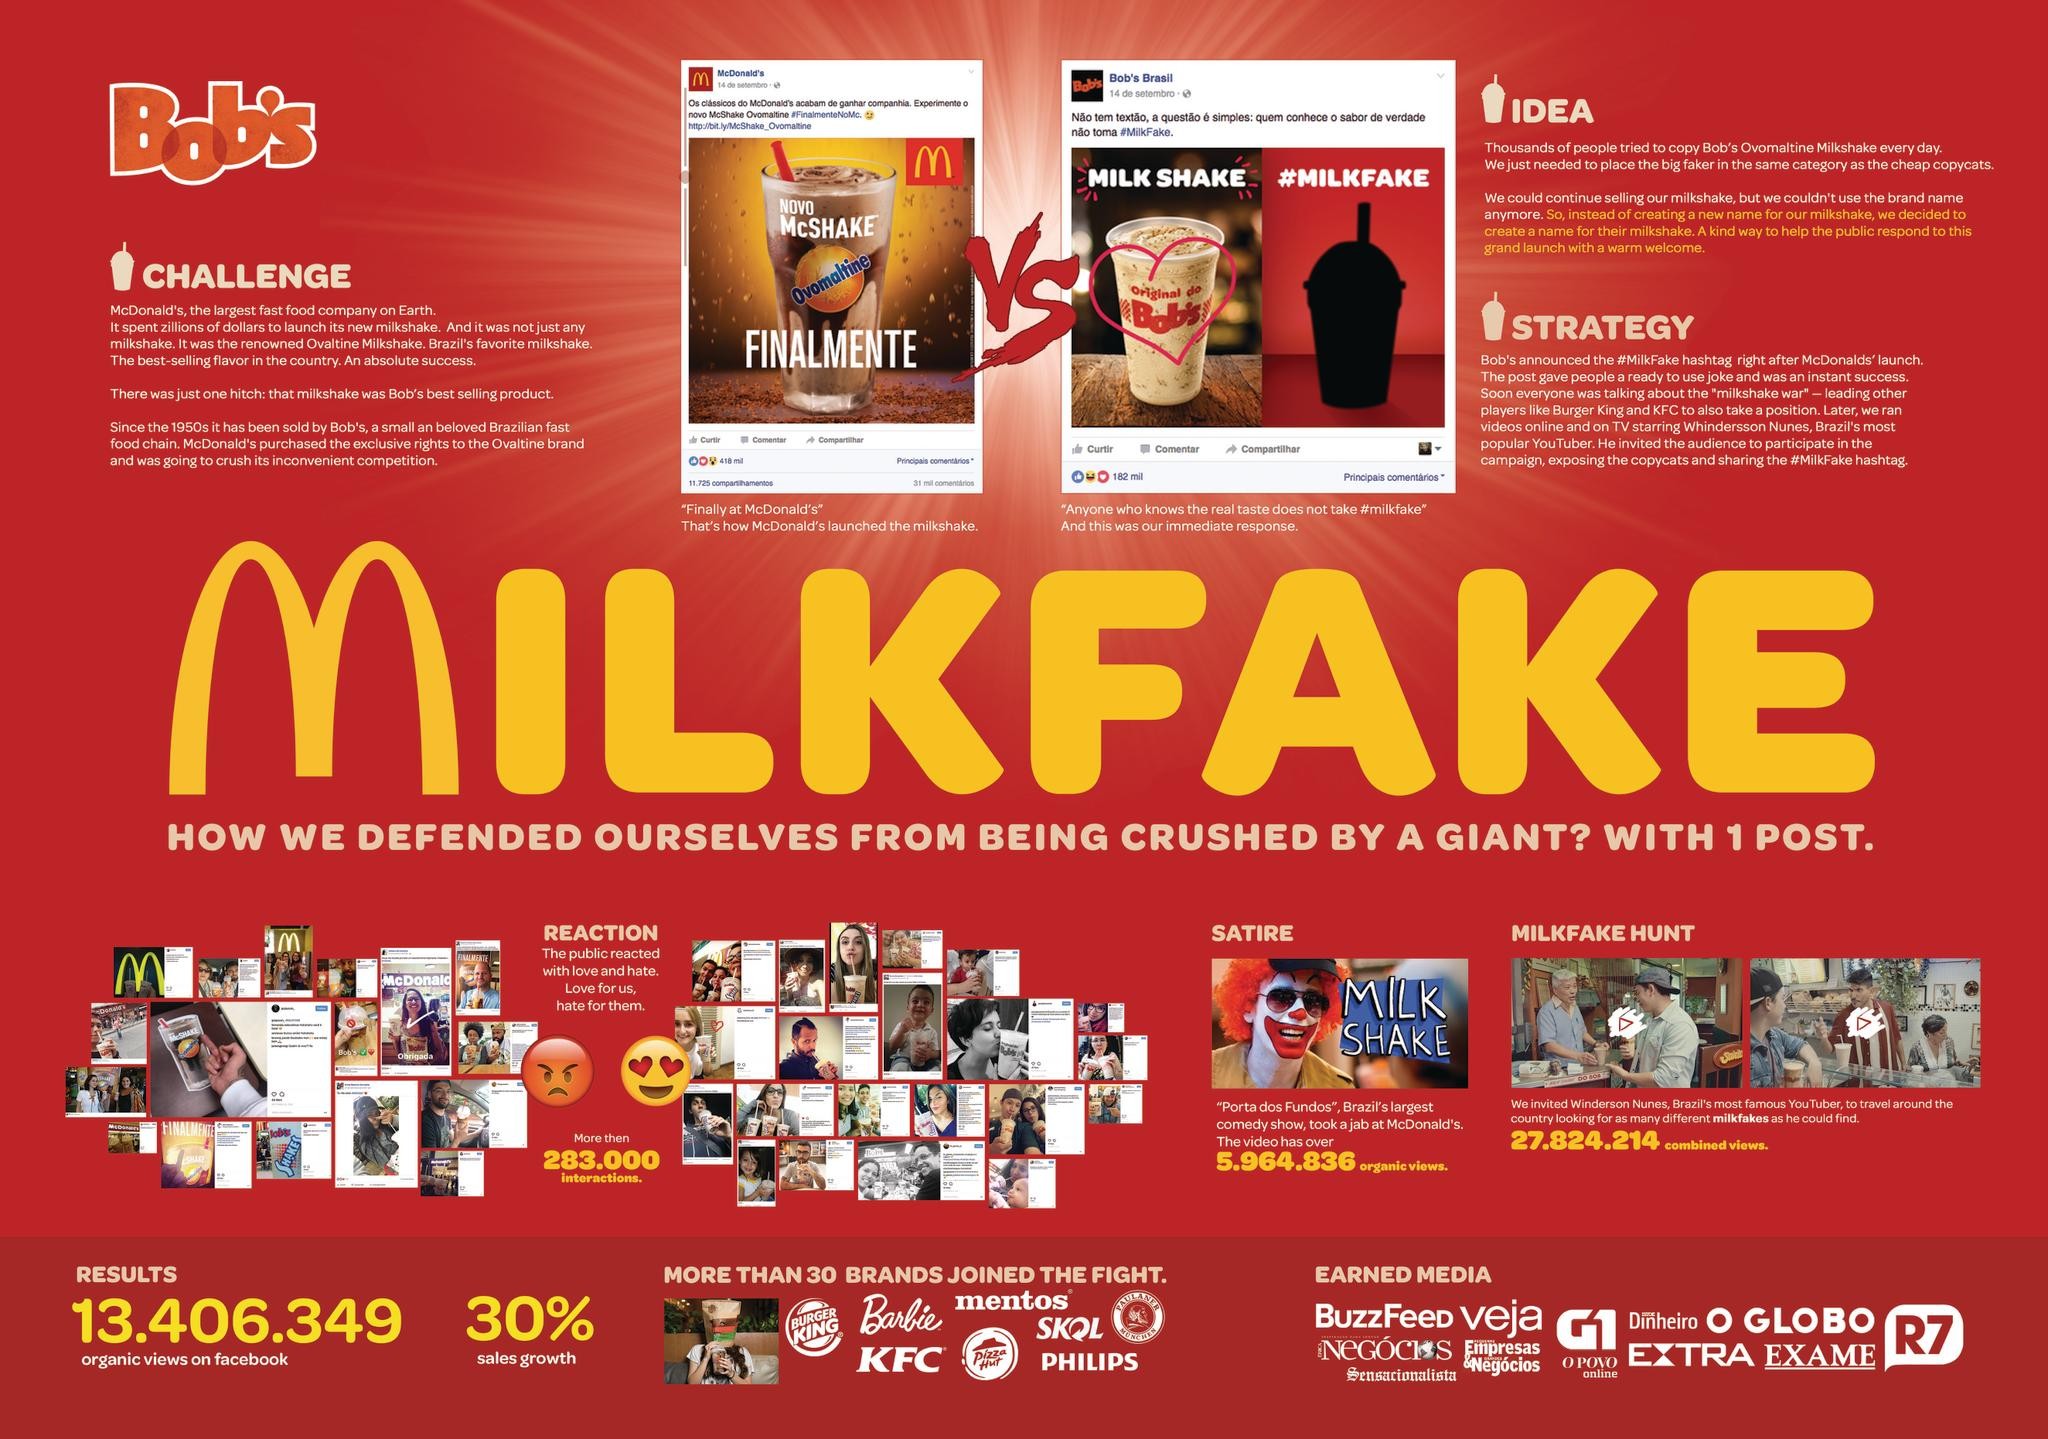 Milkfake